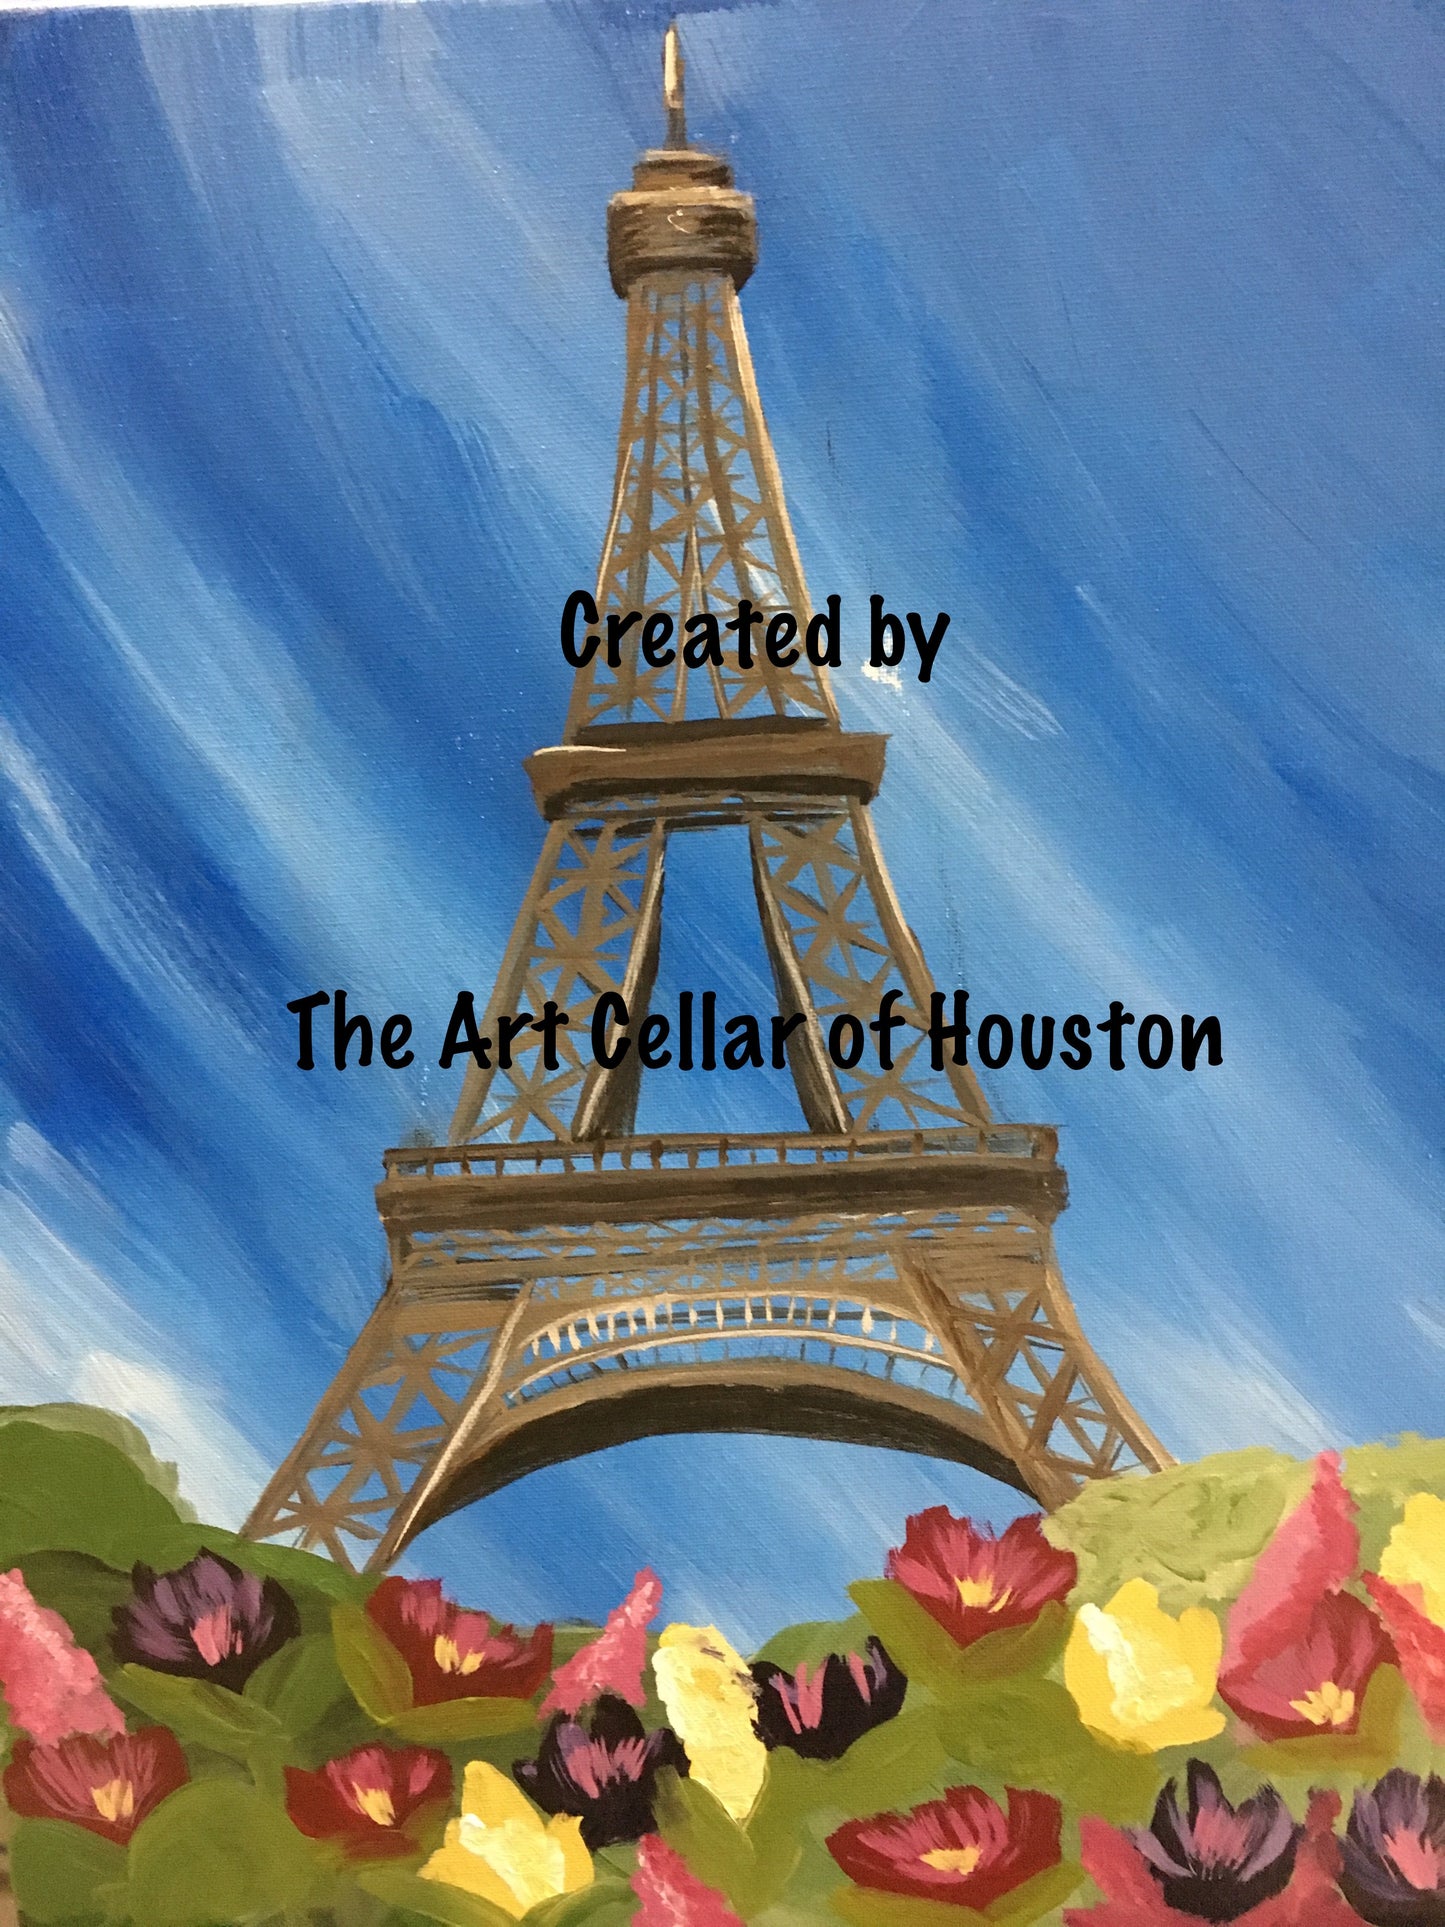 Thu, Sep 29th, 4-6P “Sketch Basics: Eiffel Tower” Public Houston Family Art Class